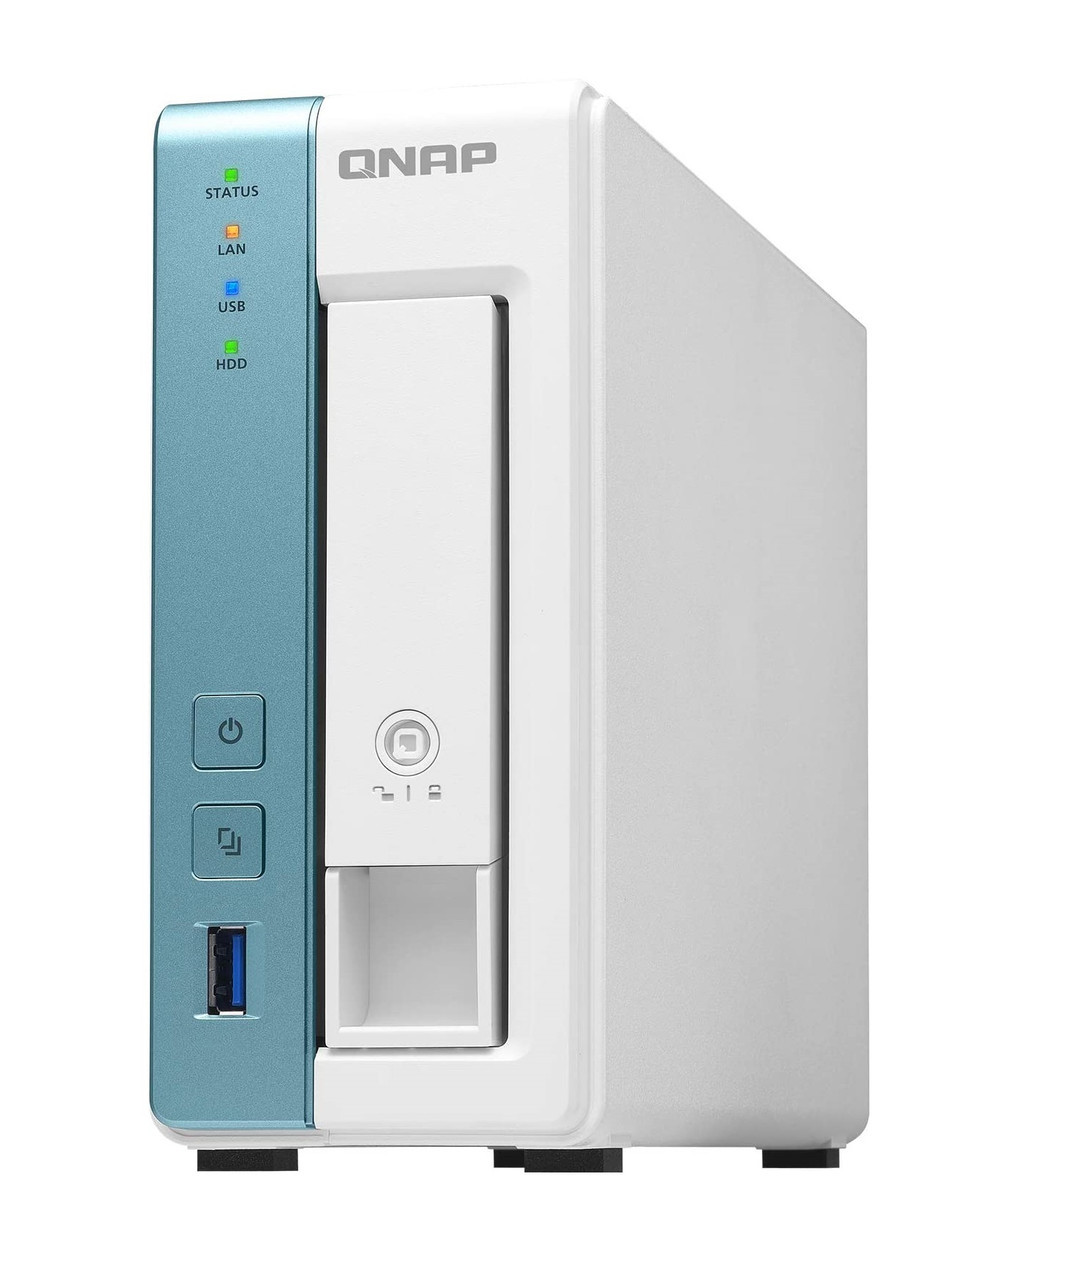 QNAP TS-131K-US 1-Bay Personal NAS 4-core 1.7GHz, 1GB RAM w/ WD Red Pro 6TB NAS Internal Hard Drive